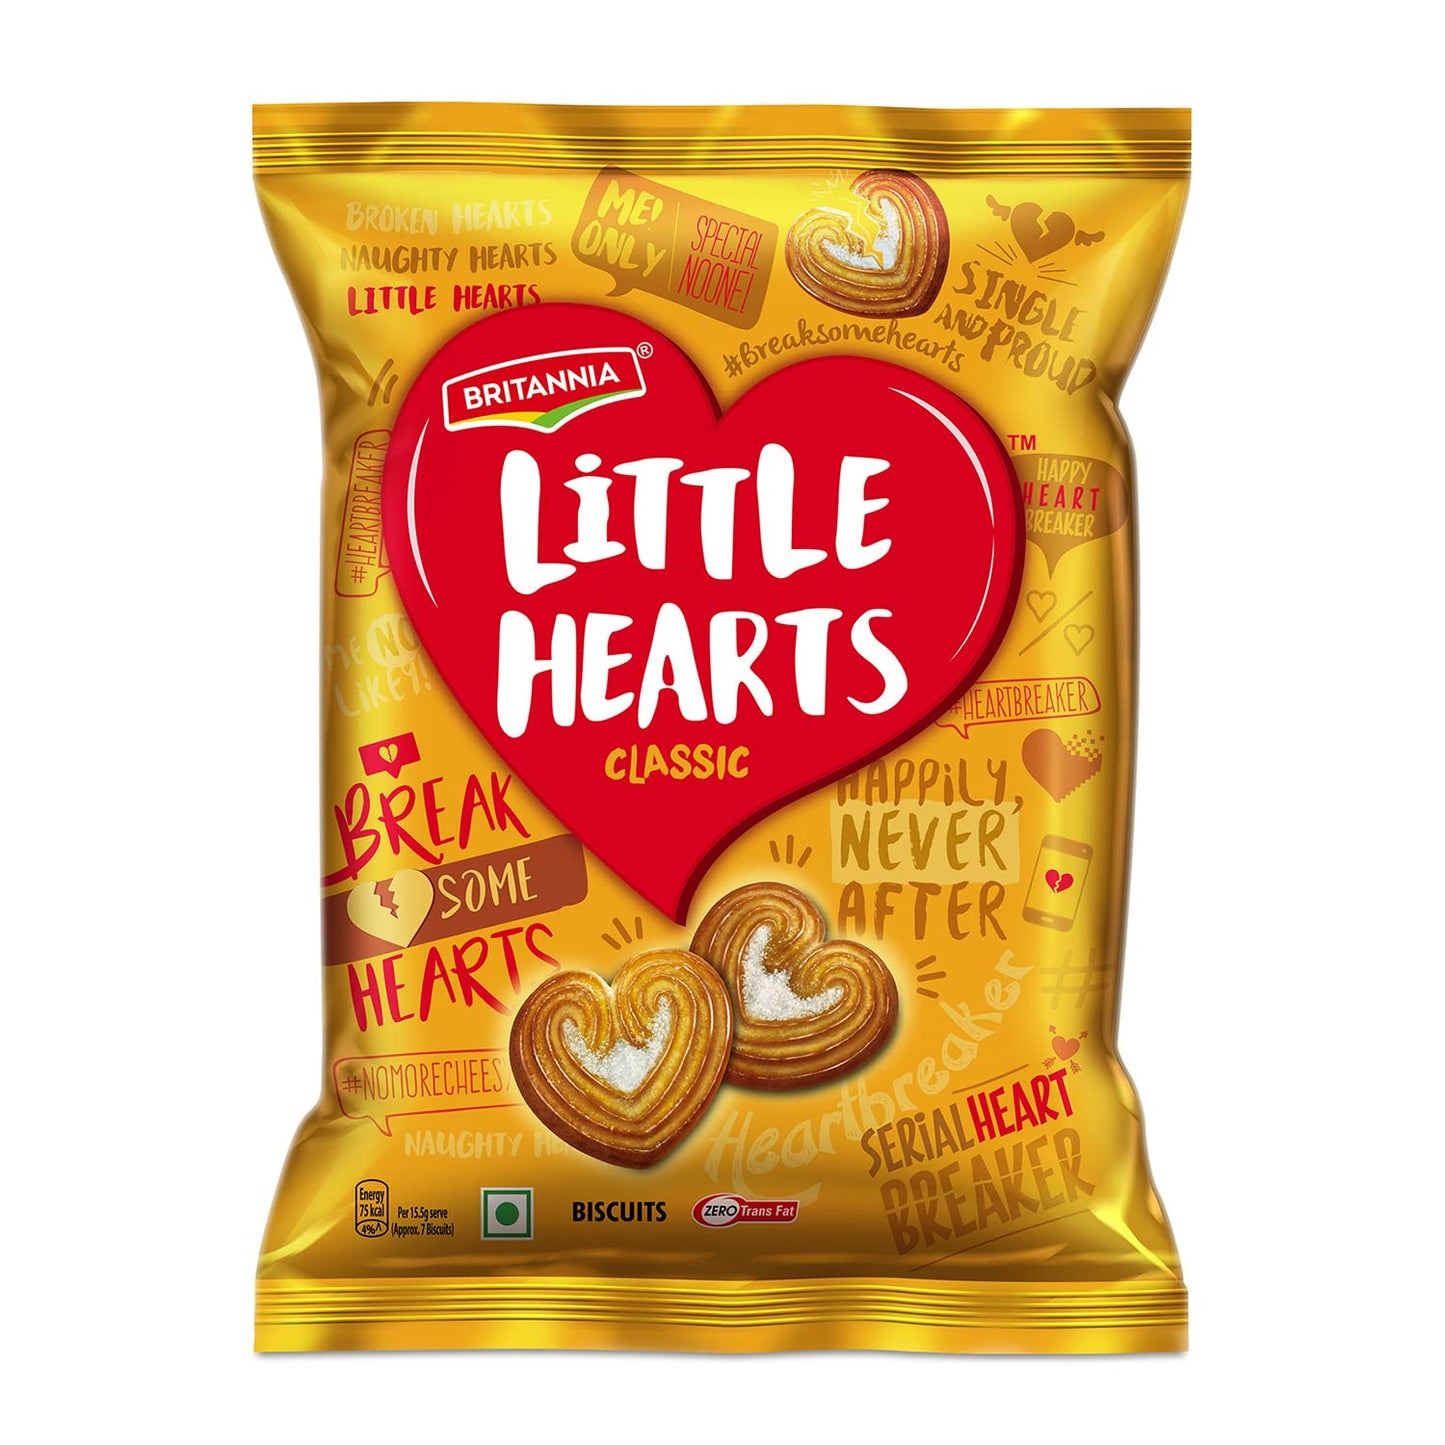 Little Hearts Classic Britannia 26 g